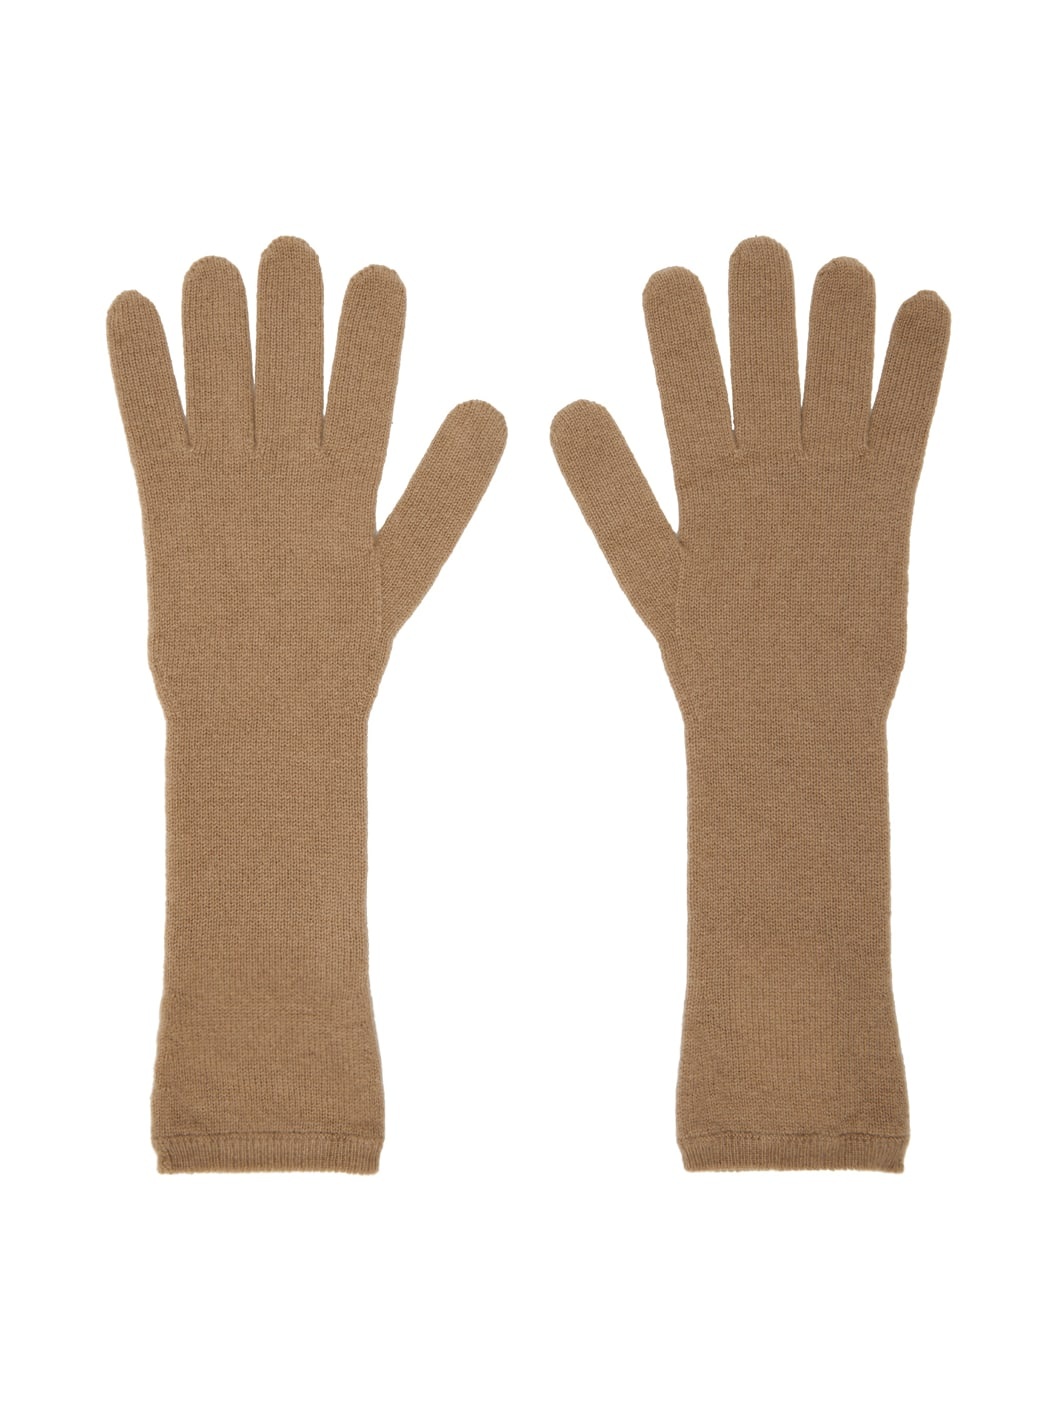 Tan Oglio Gloves - 2